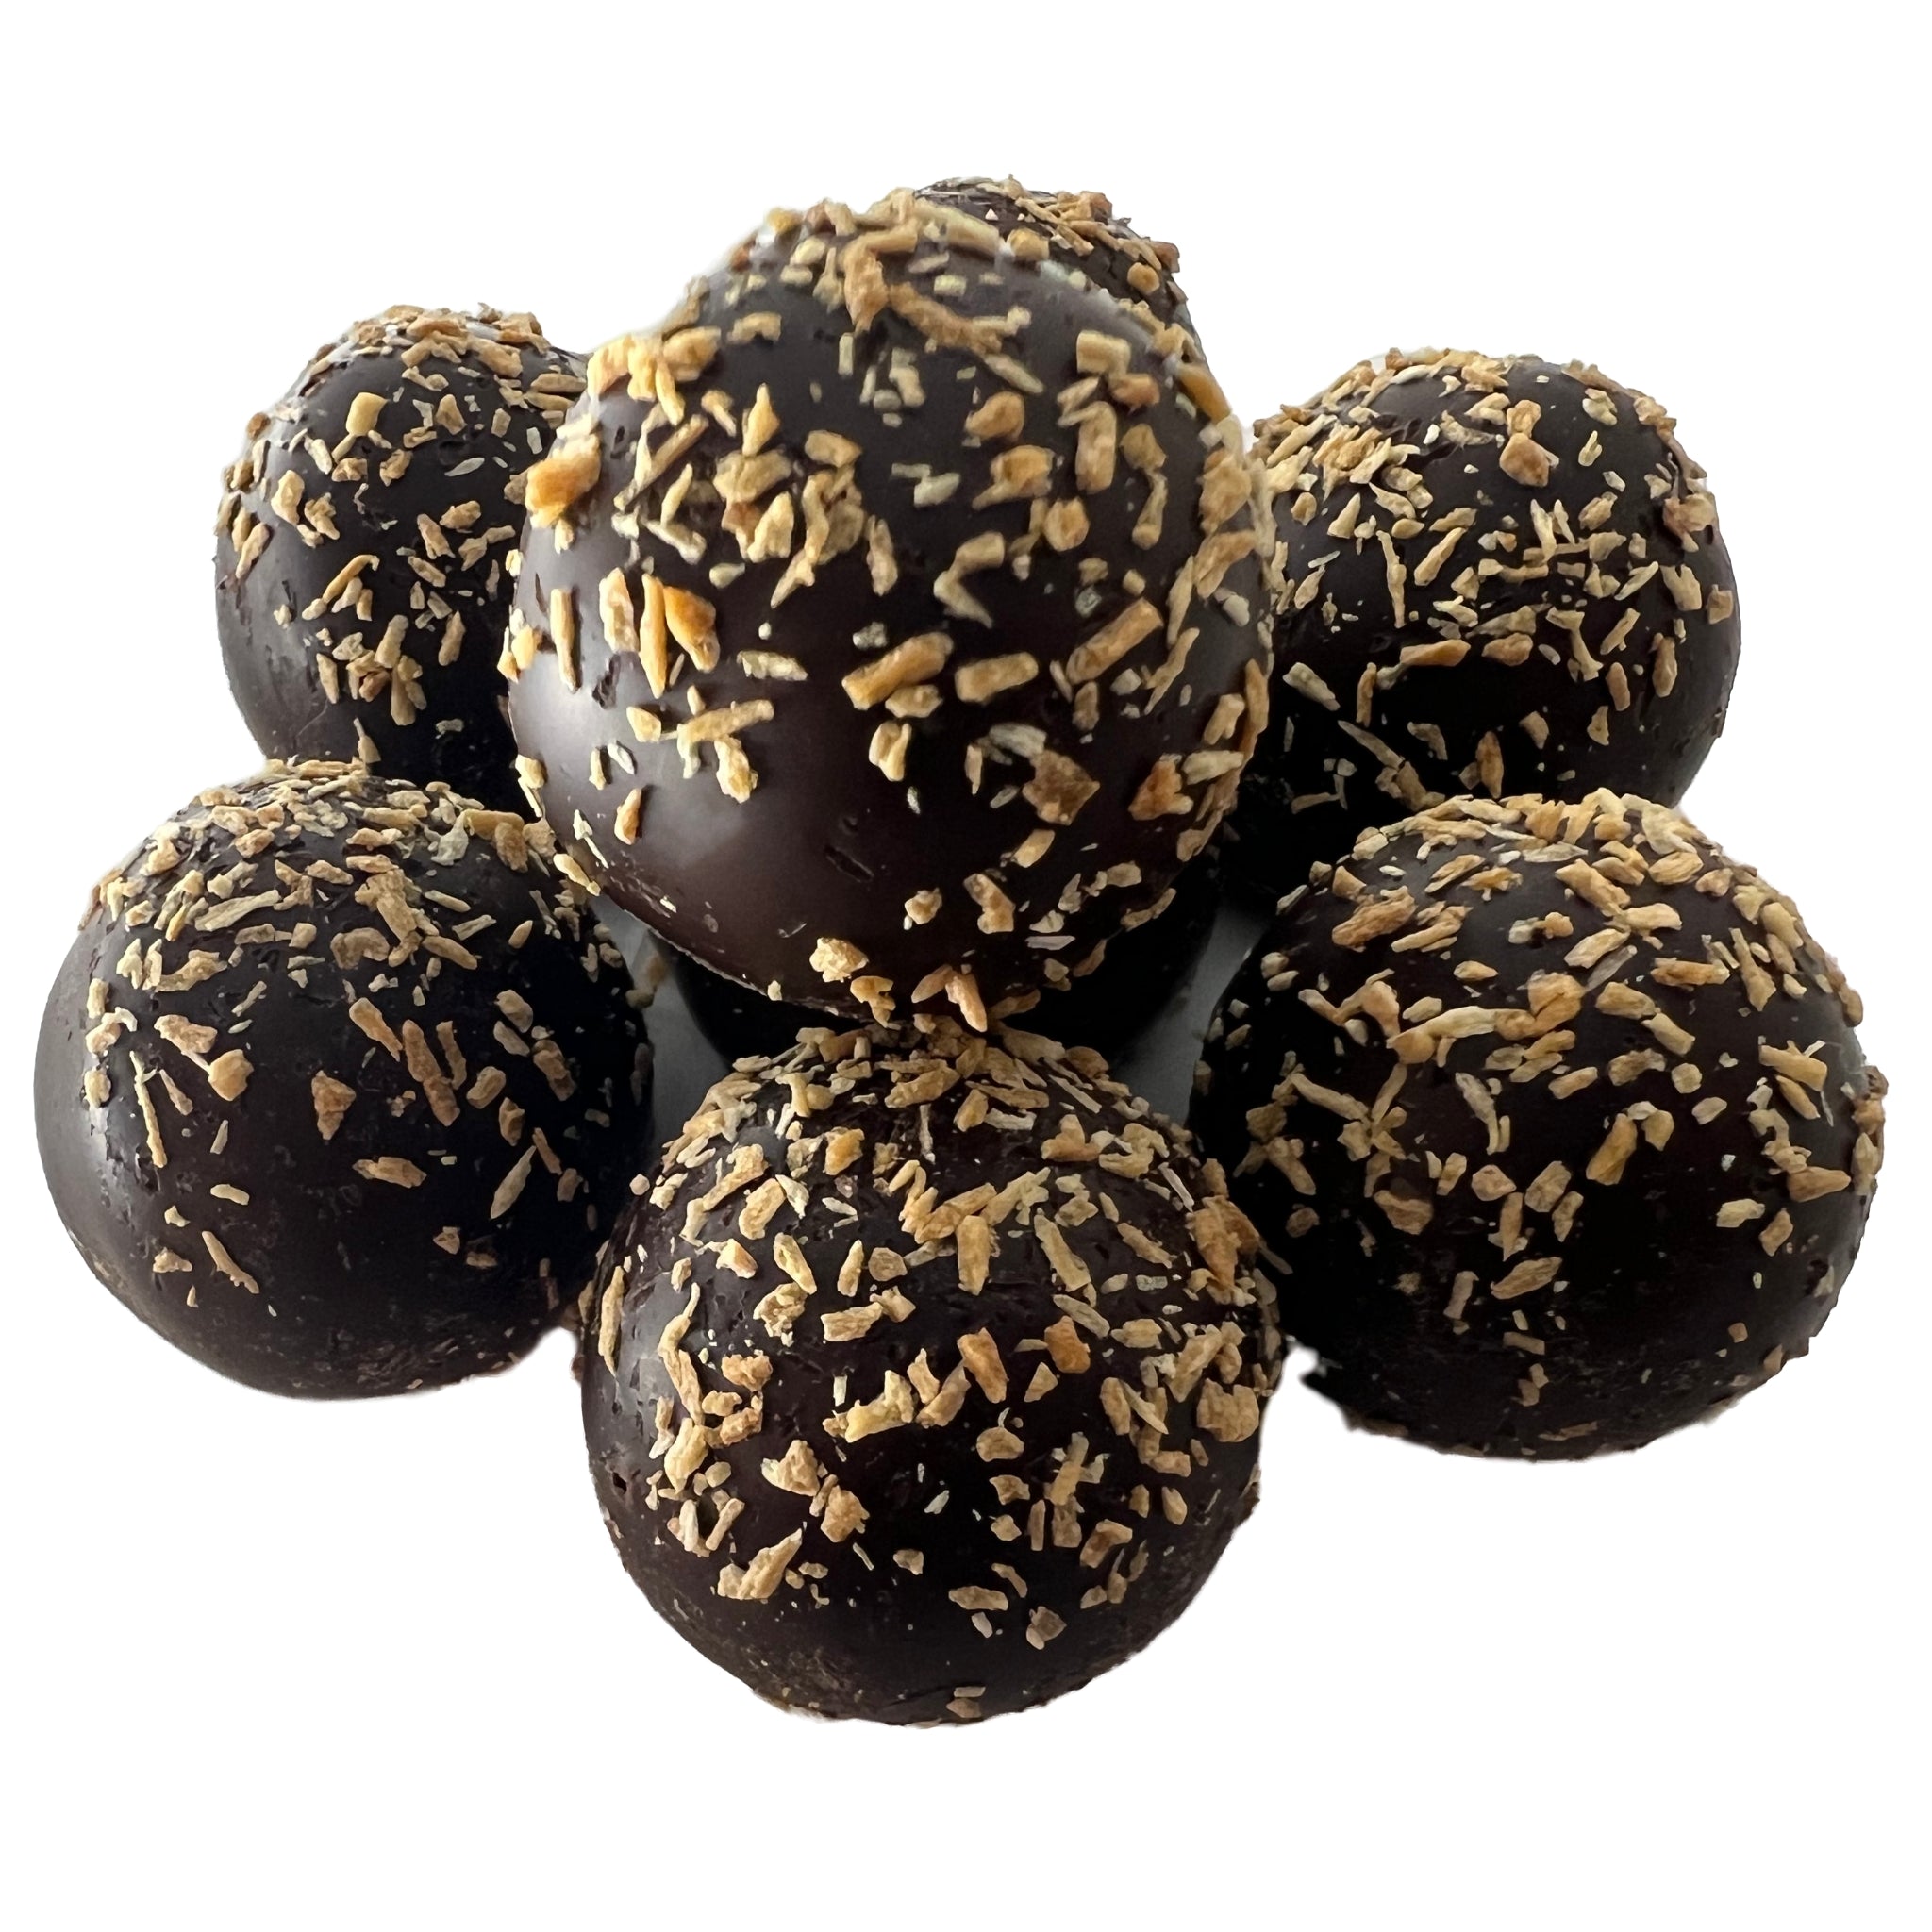 Coconut Dark Chocolate Truffle.  Round dark chocolate balls with toasted coconut sprinkles. 